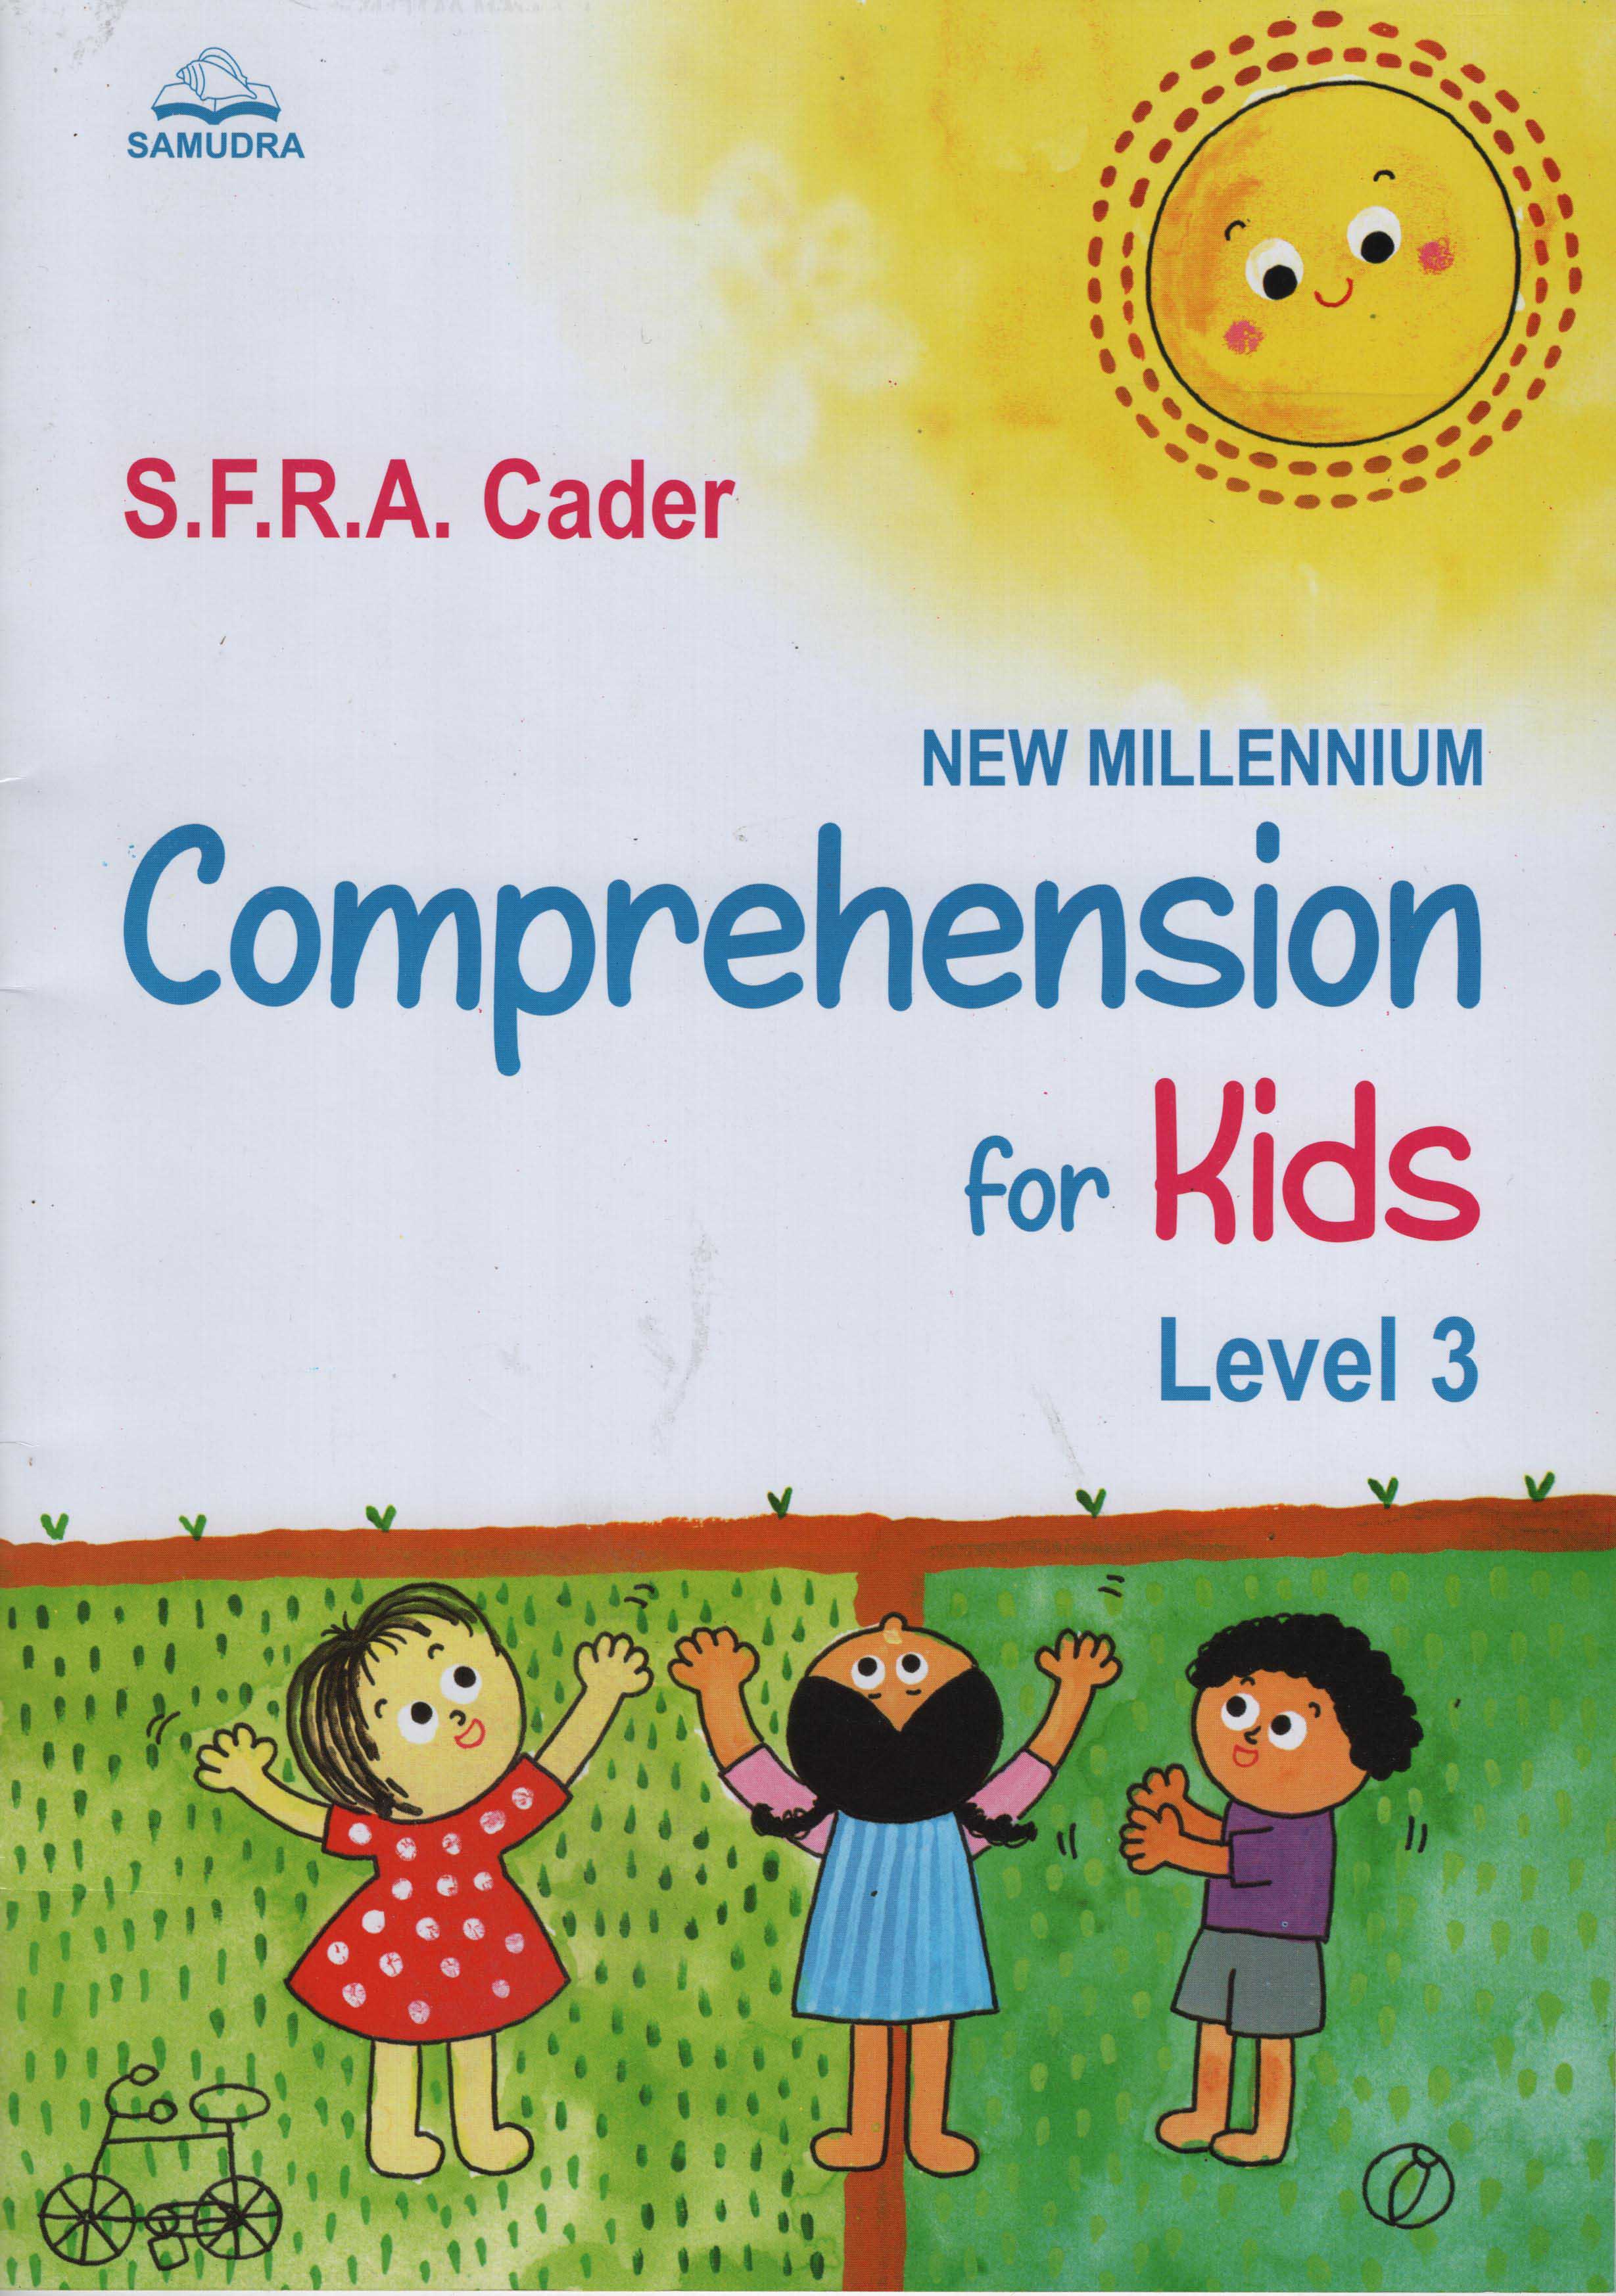 New Millennium Comprehension for Kids Level 3